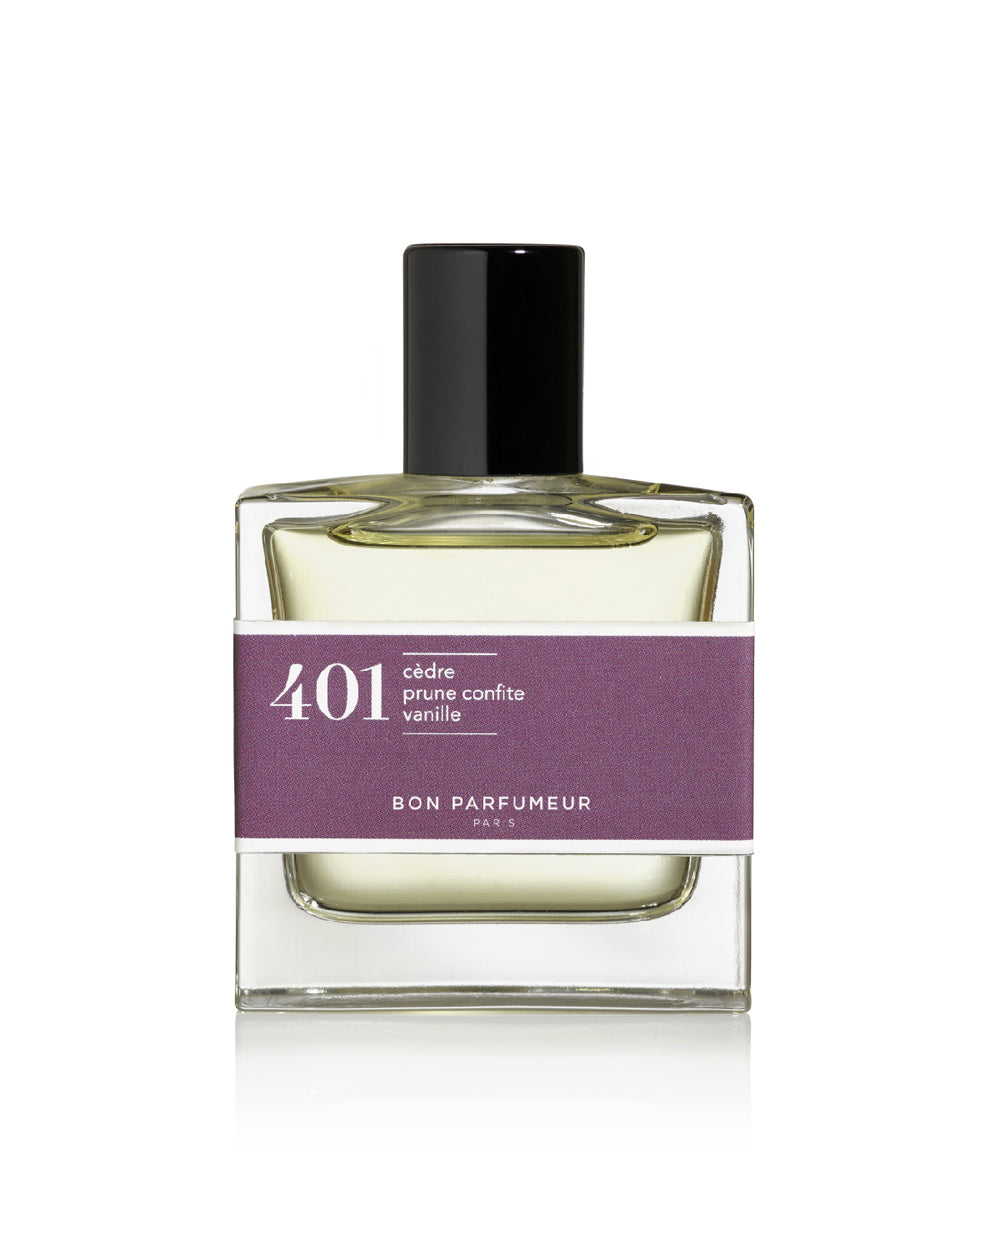 Bon Parfumeur 401